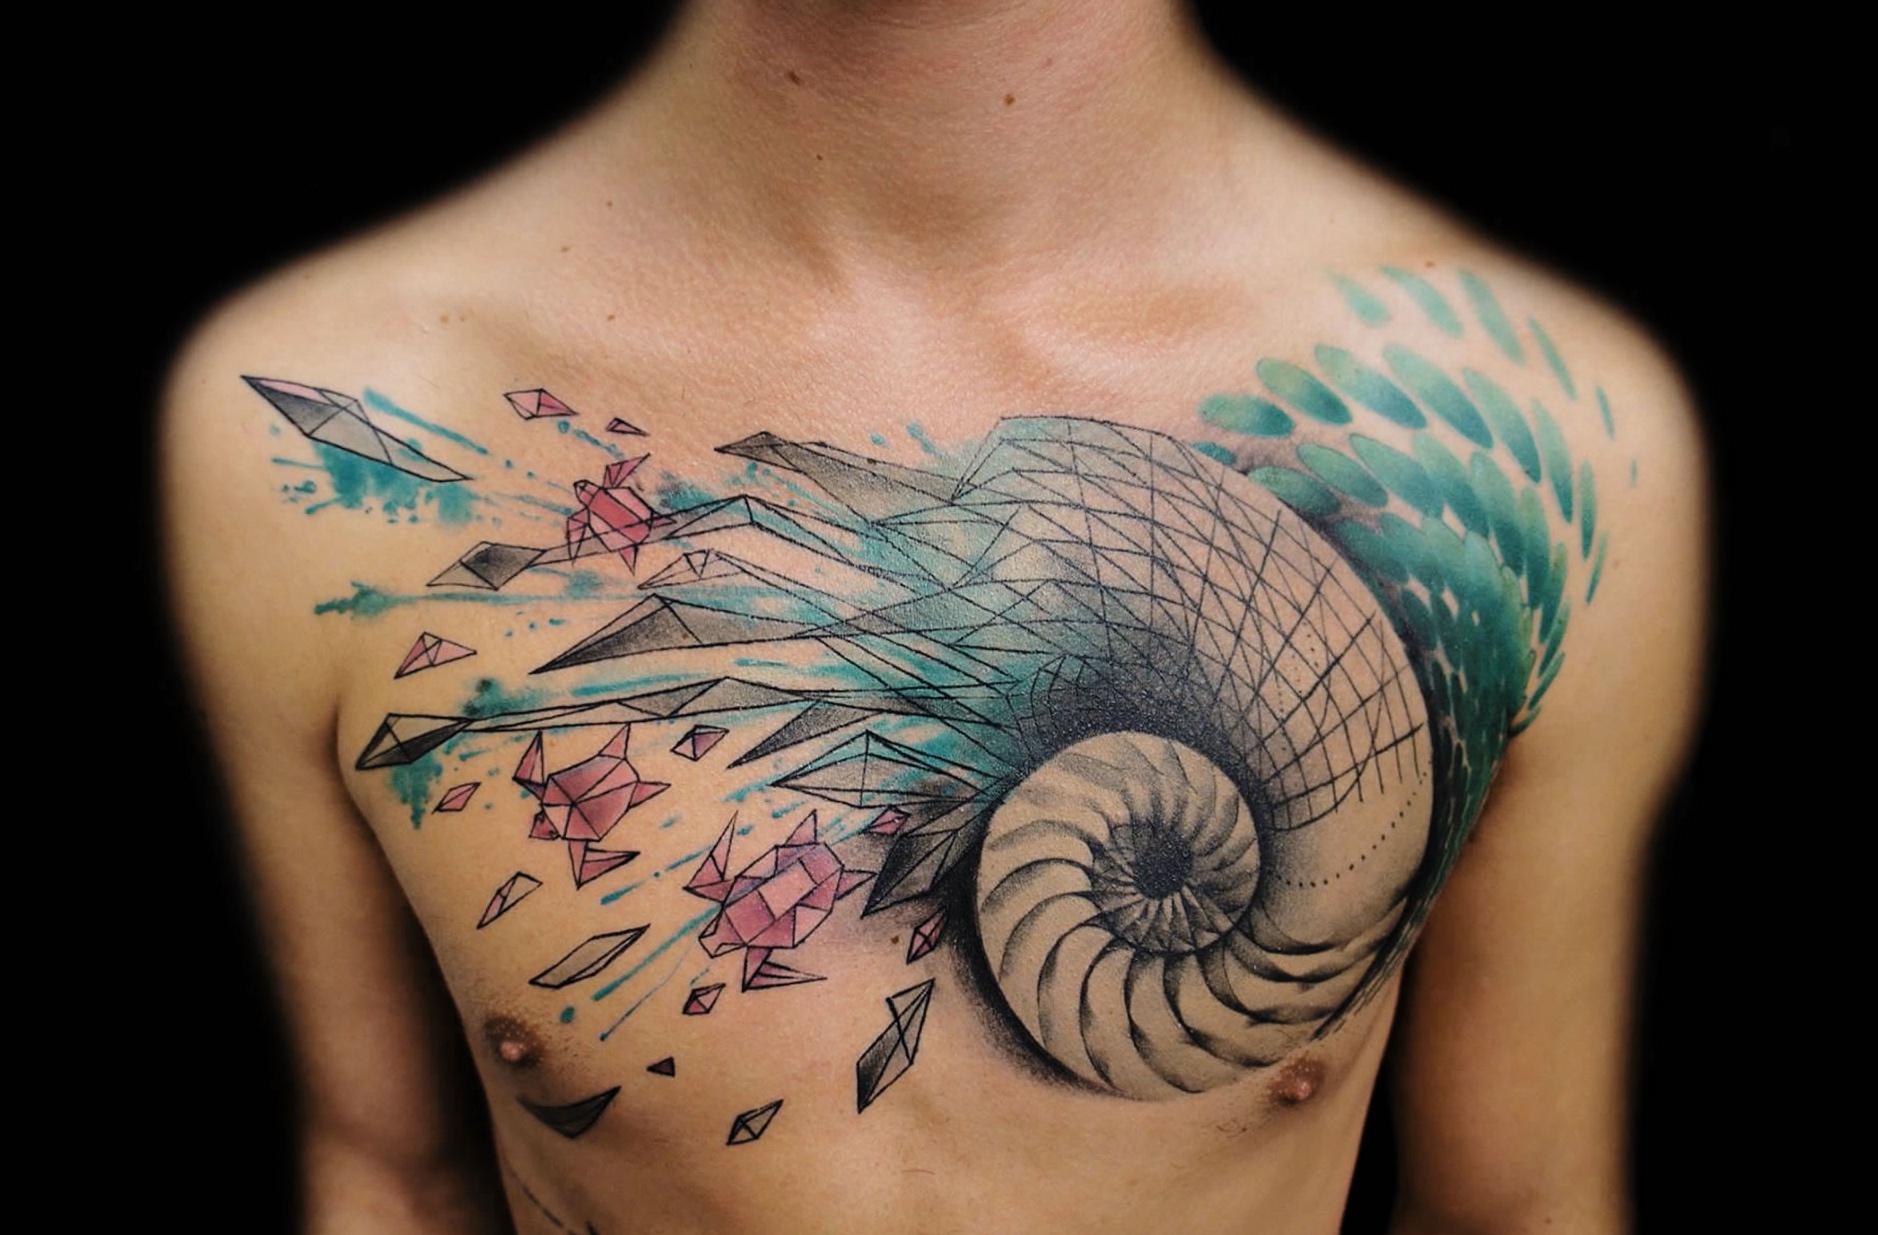 Painful Pleasures - Geometric, nature, and watercolor tattoo by Monika  Ochman Tattoo. #painfulpleasures | Facebook